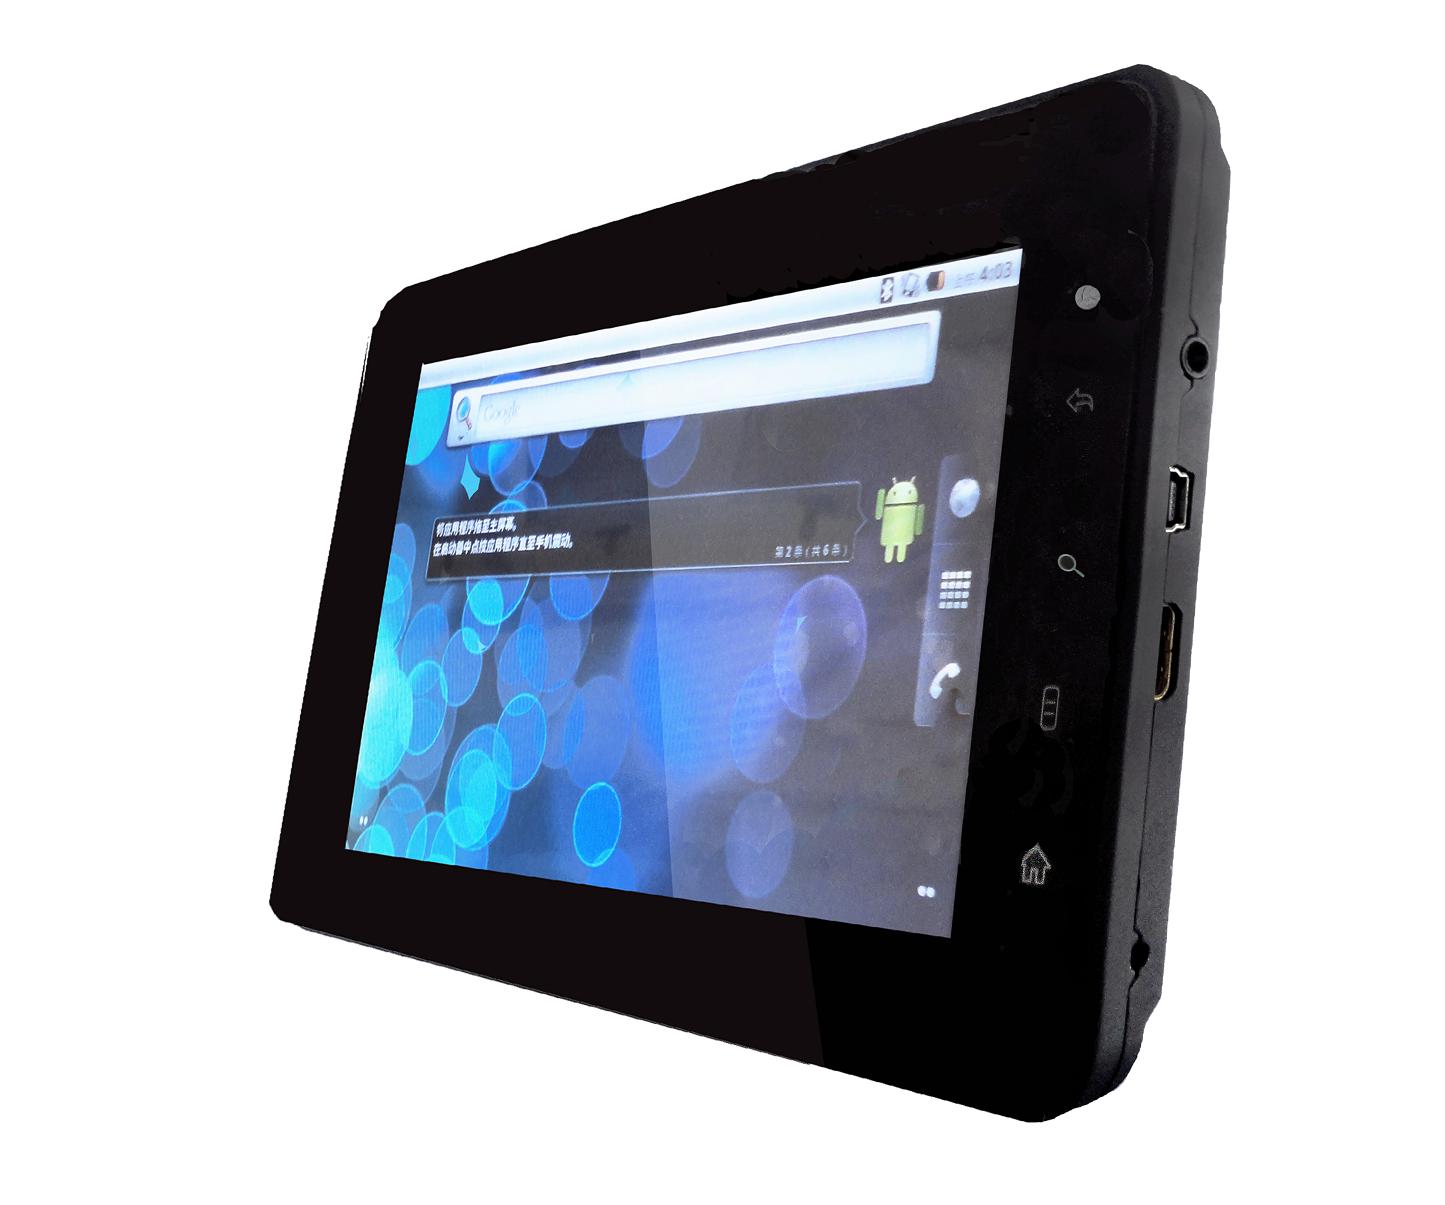 7 inch Andorid mid RFID tablet PC